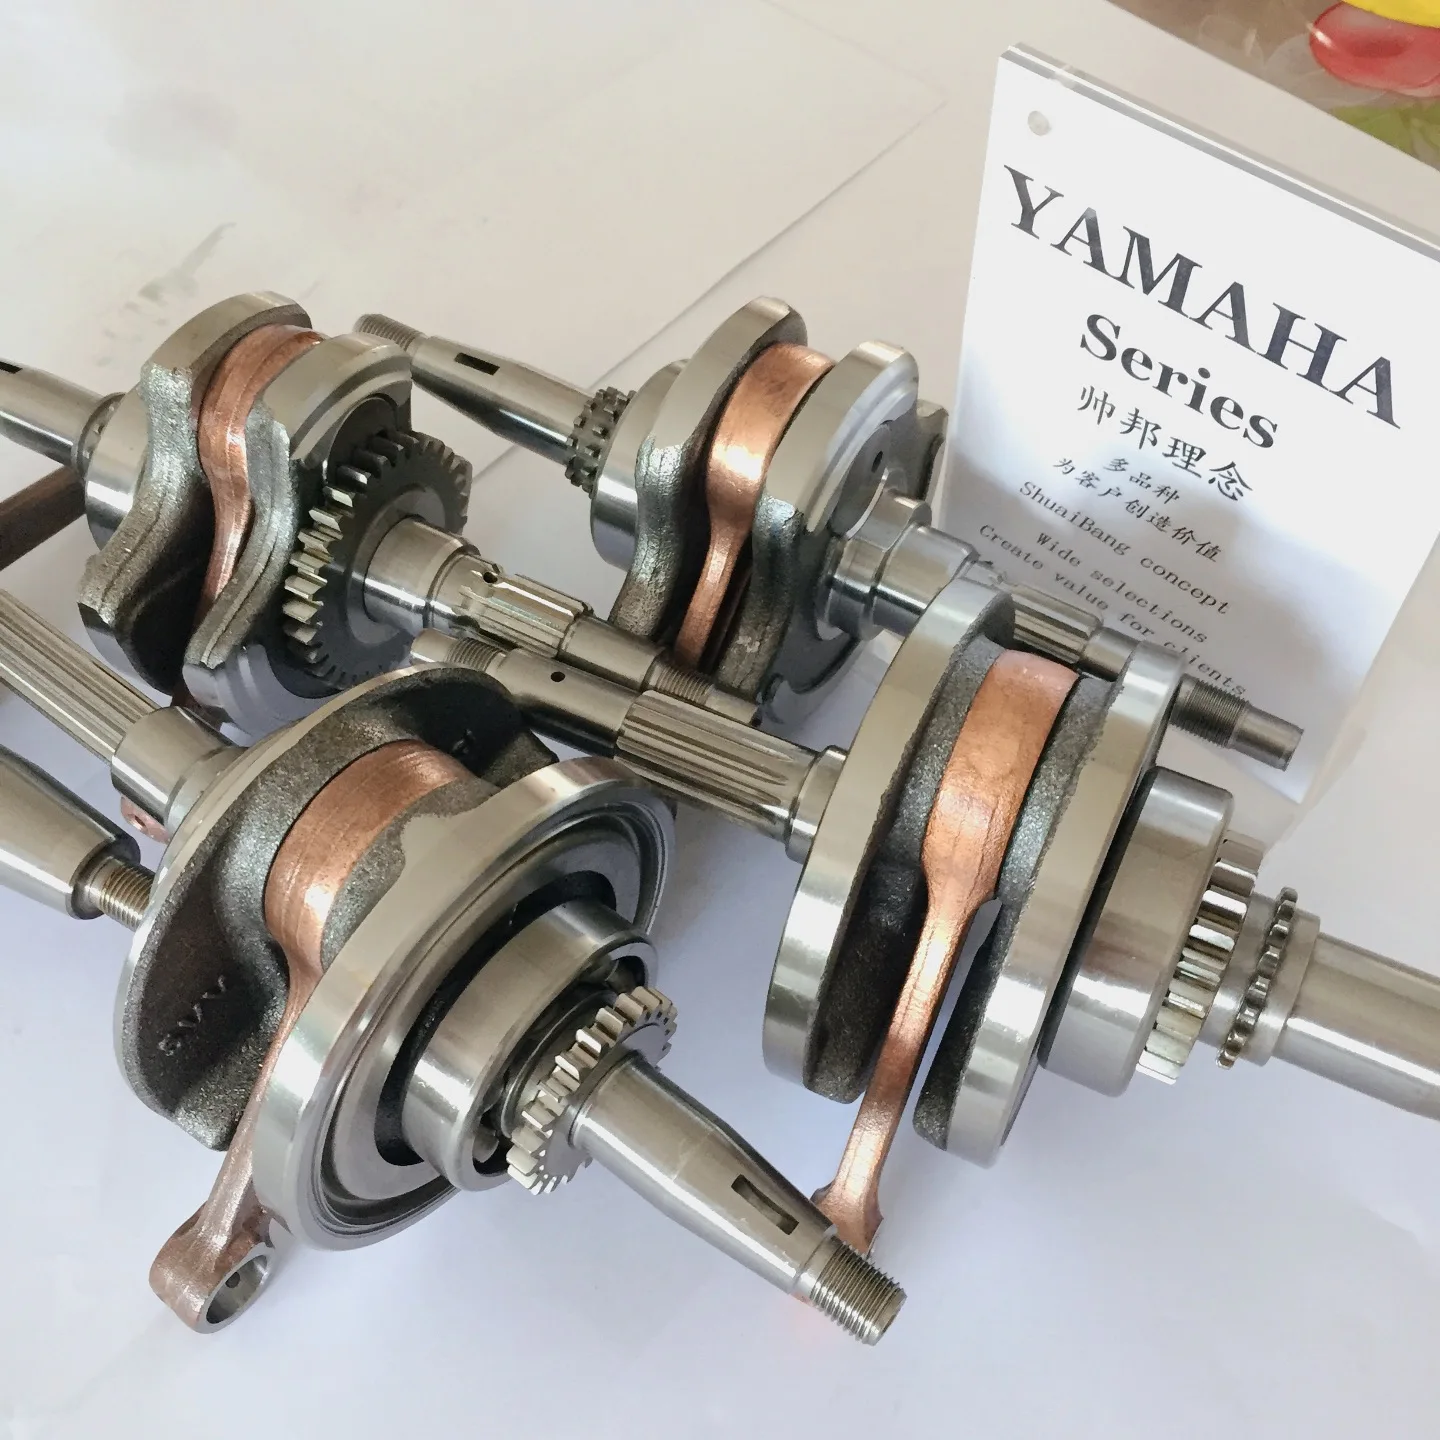 China Oem For Yamaha Rx 100 115 Rx100 Rx115 Crankshaft With Price